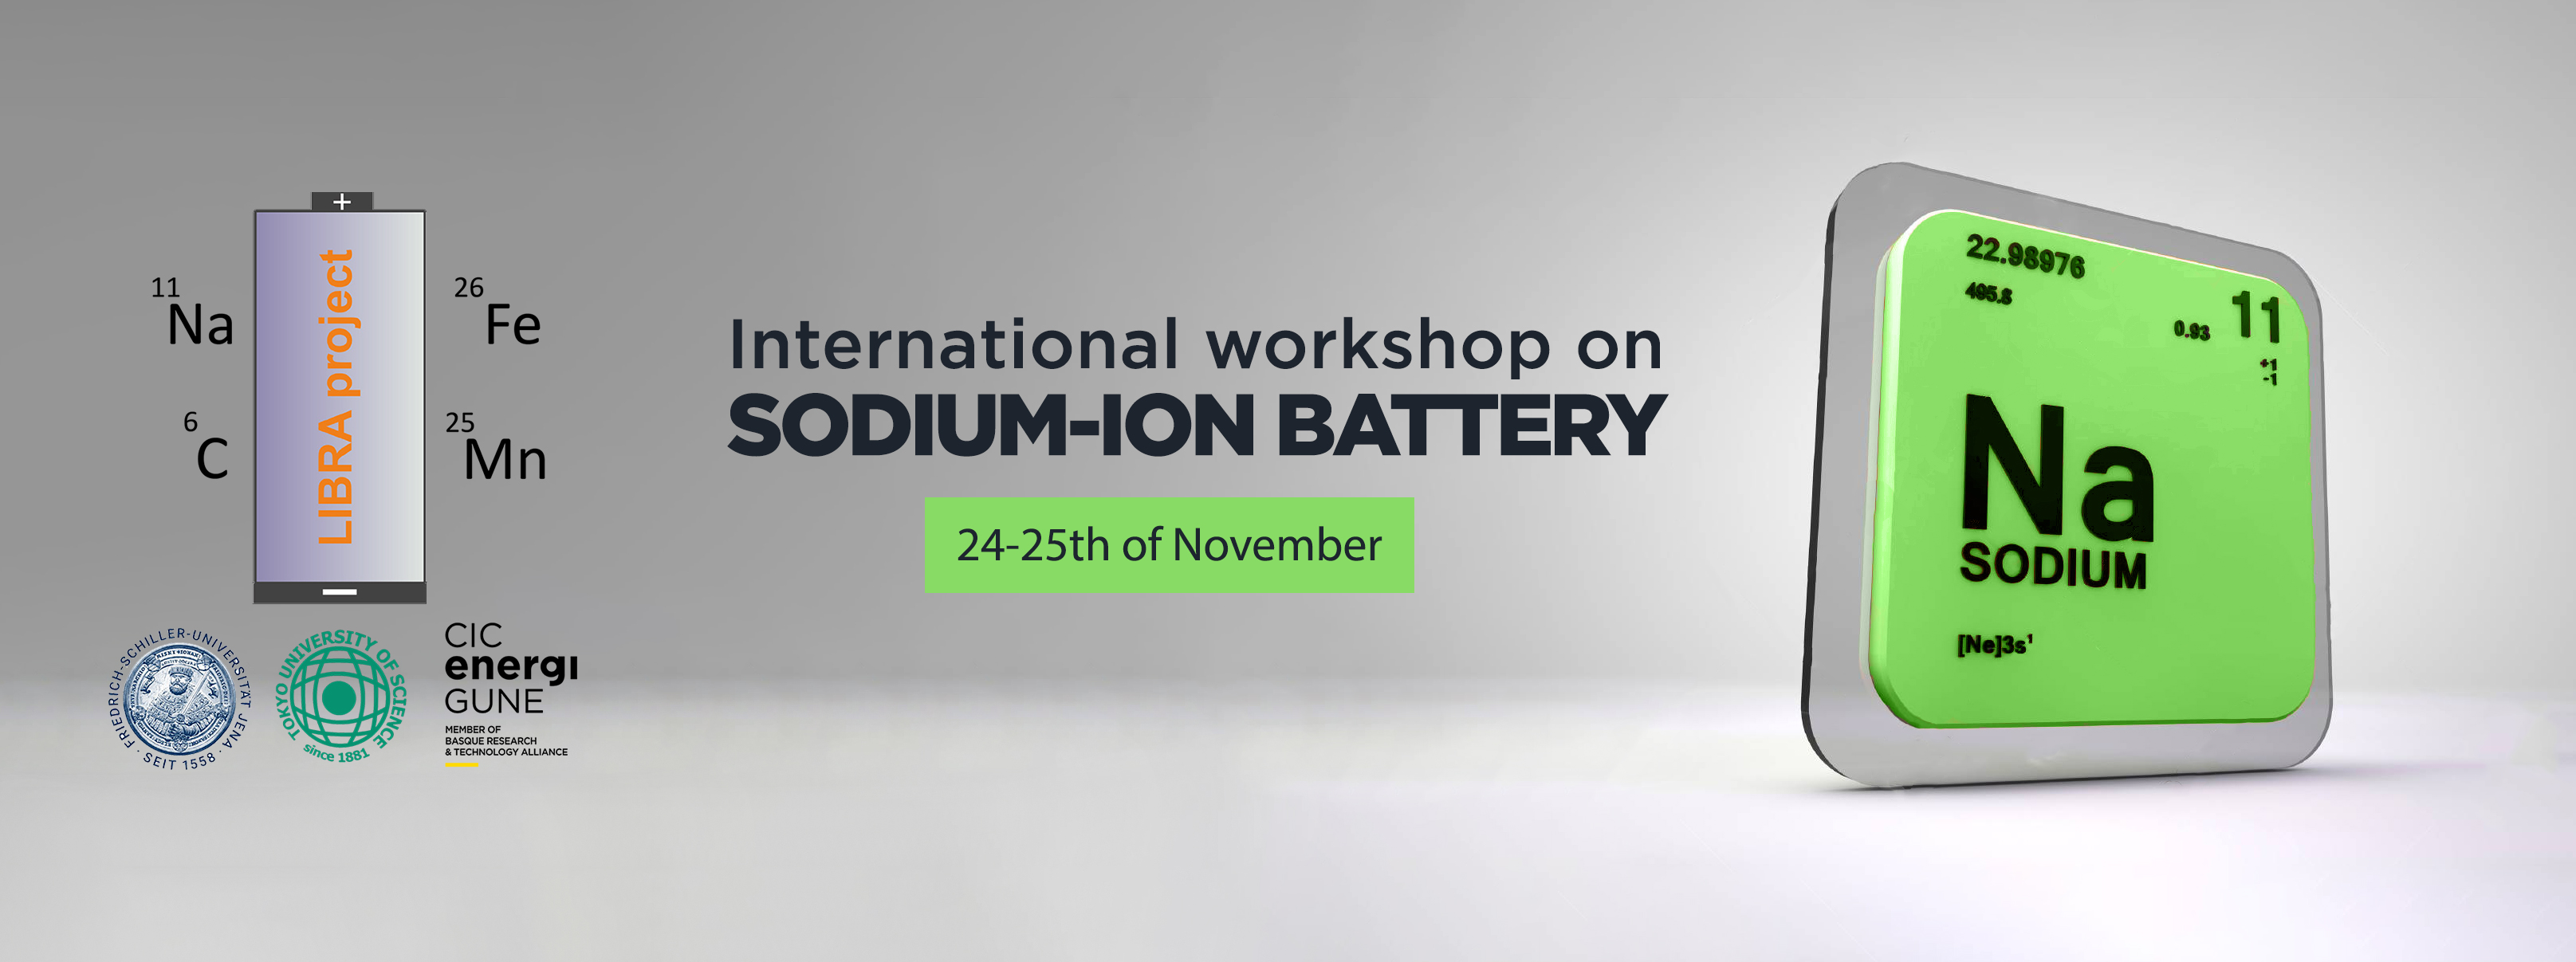 International workshop on Sodium-Ion Battery